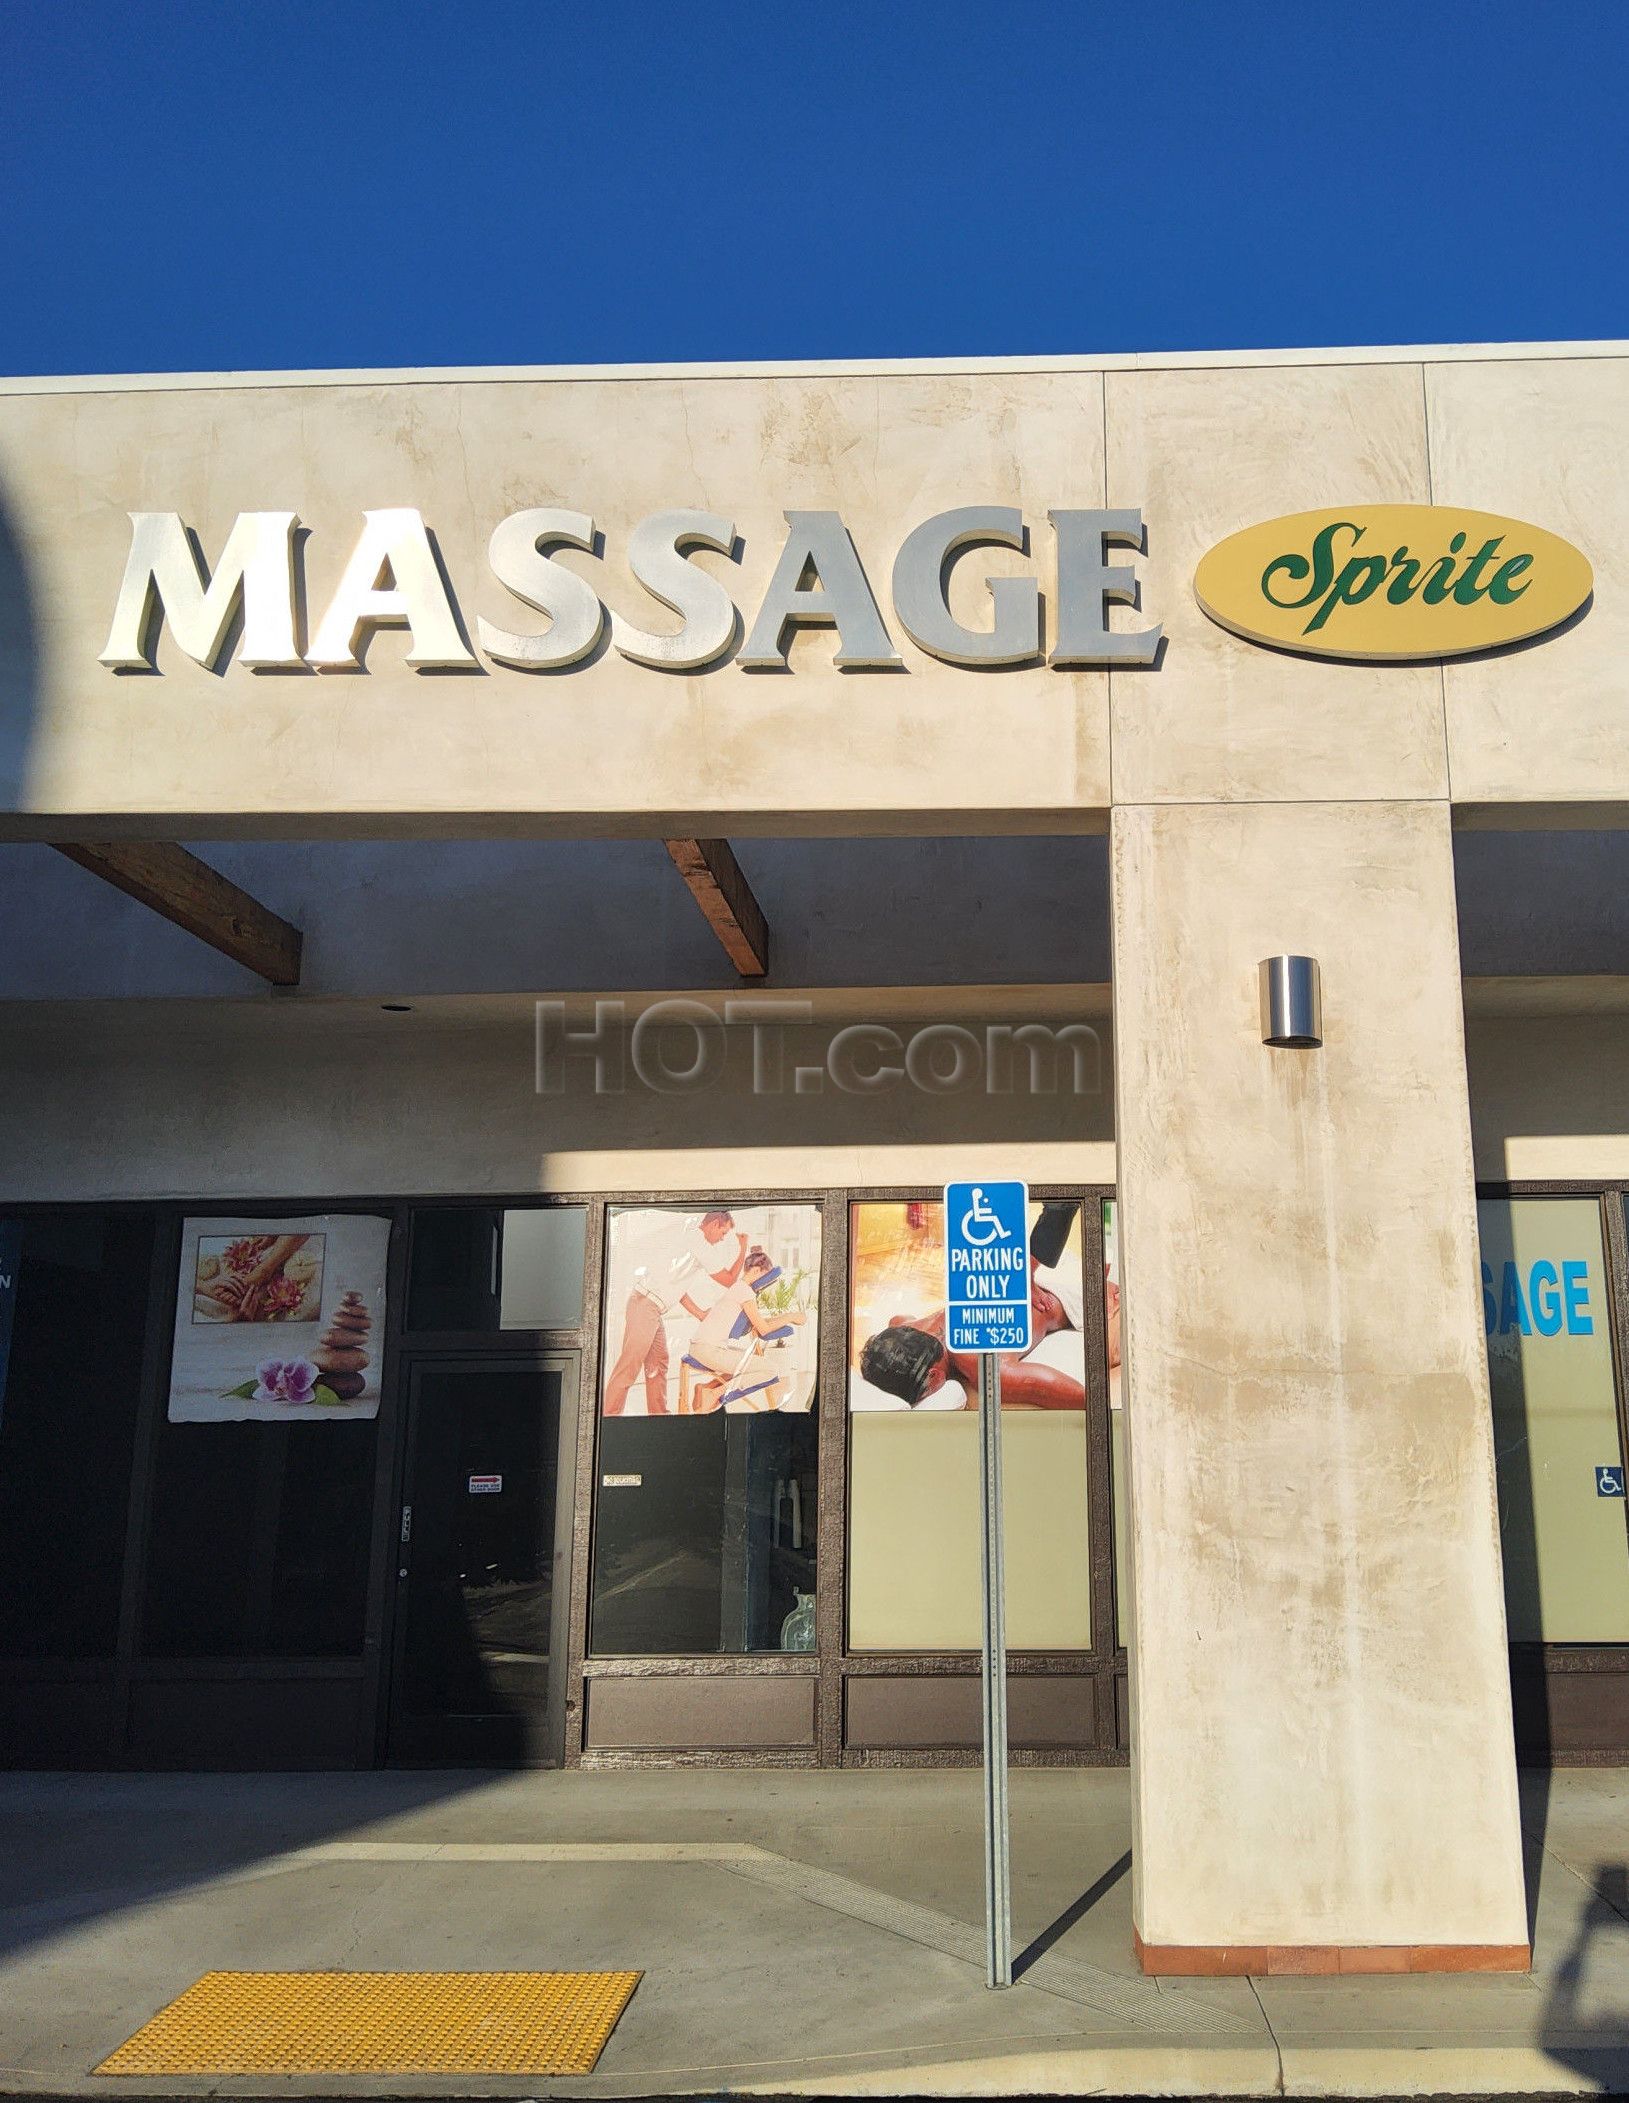 Santa Ana, California Massage Sprite